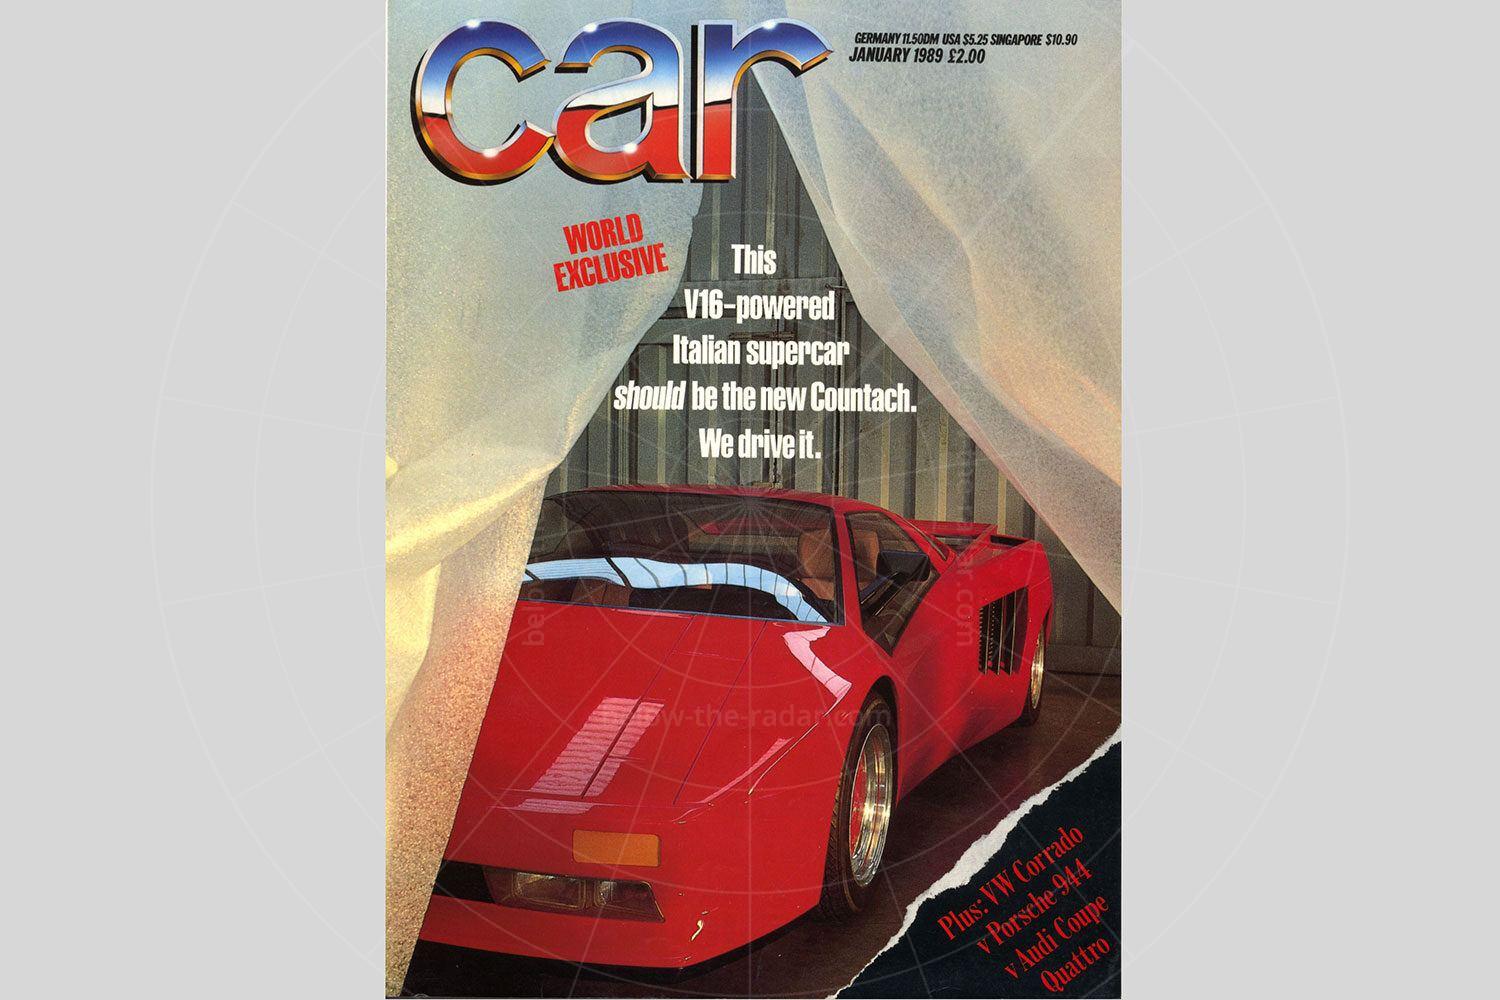 The Cizeta on the front cover of Car magazine, January 1989 Pic: magiccarpics.co.uk | The Cizeta on the front cover of Car magazine, January 1989